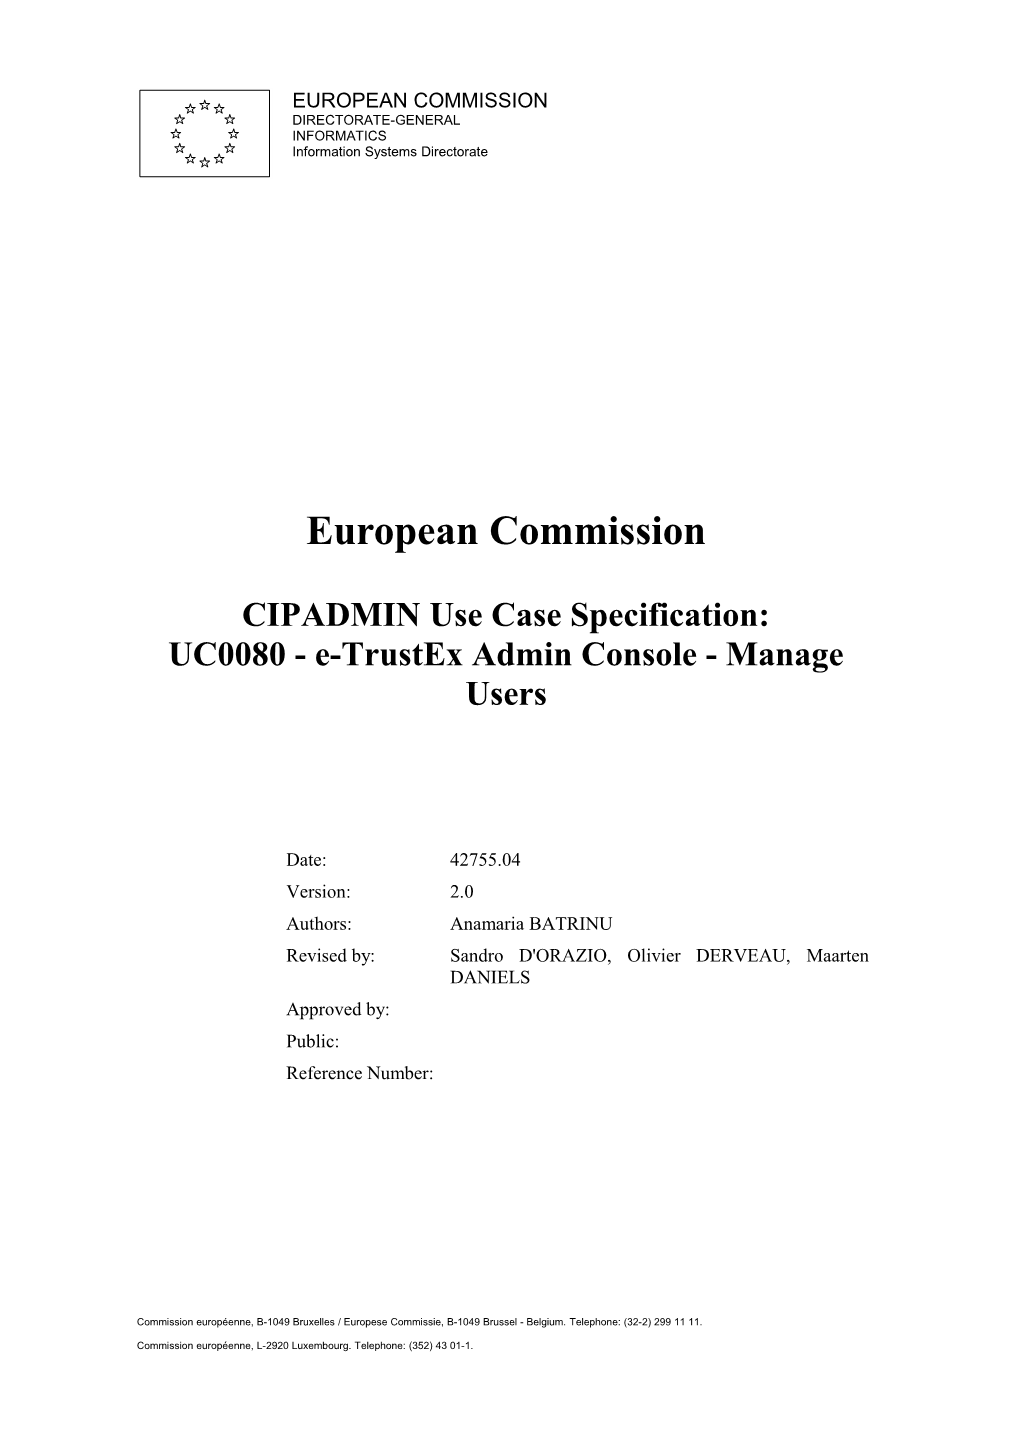 CIPADMIN Use Case Specification: UC0080 - E-Trustex Admin Console - Manage Users